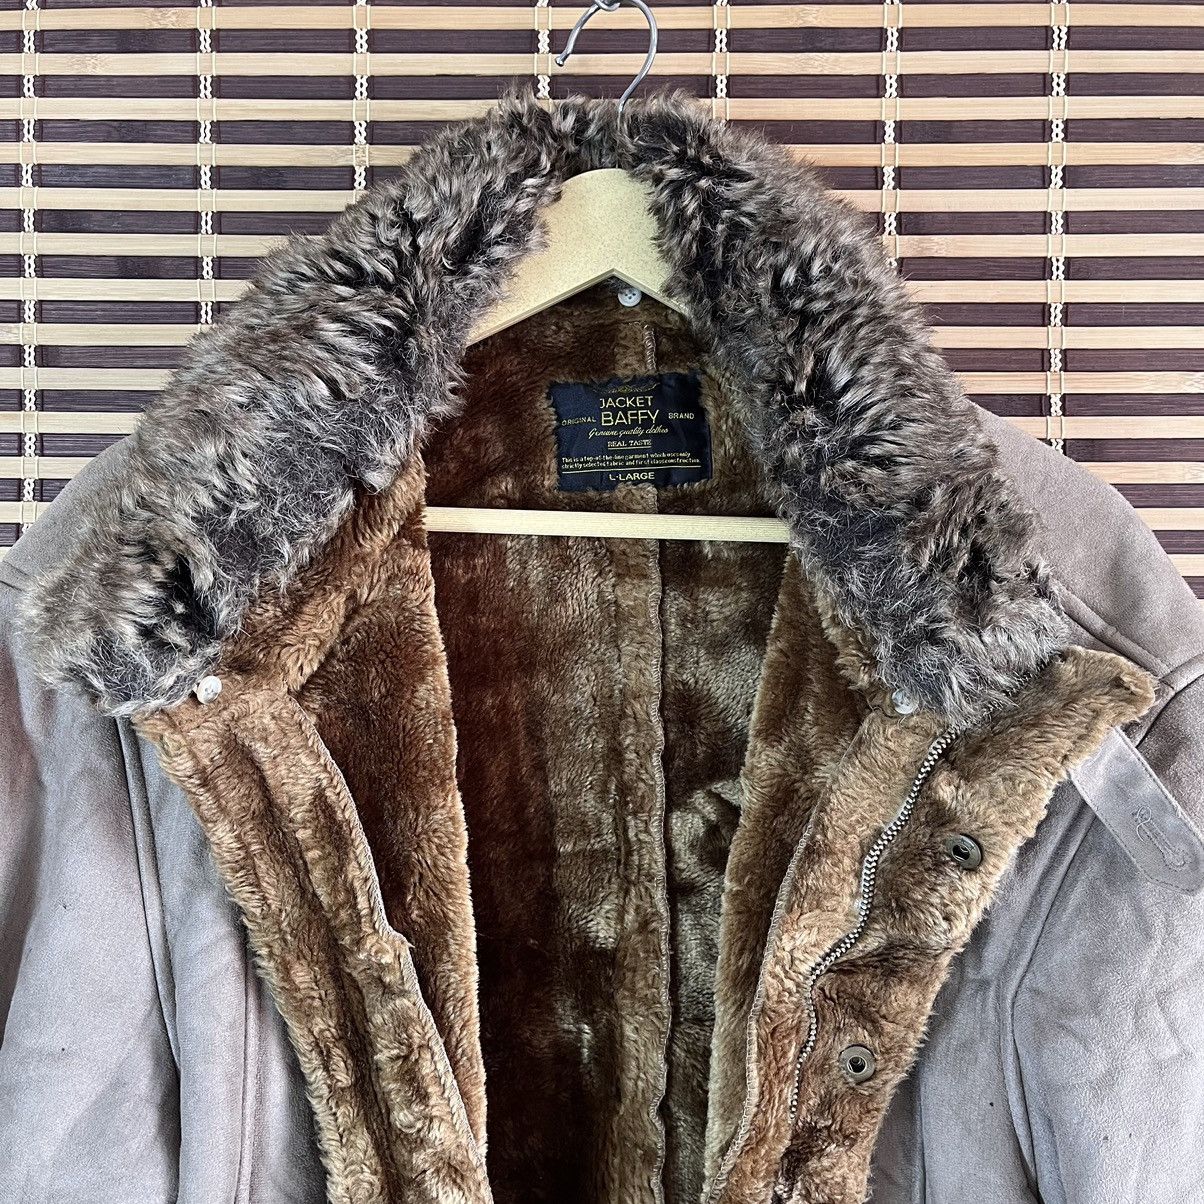 Vintage - Original Handmade Jacket Baffy B3 Type With Fur - 19